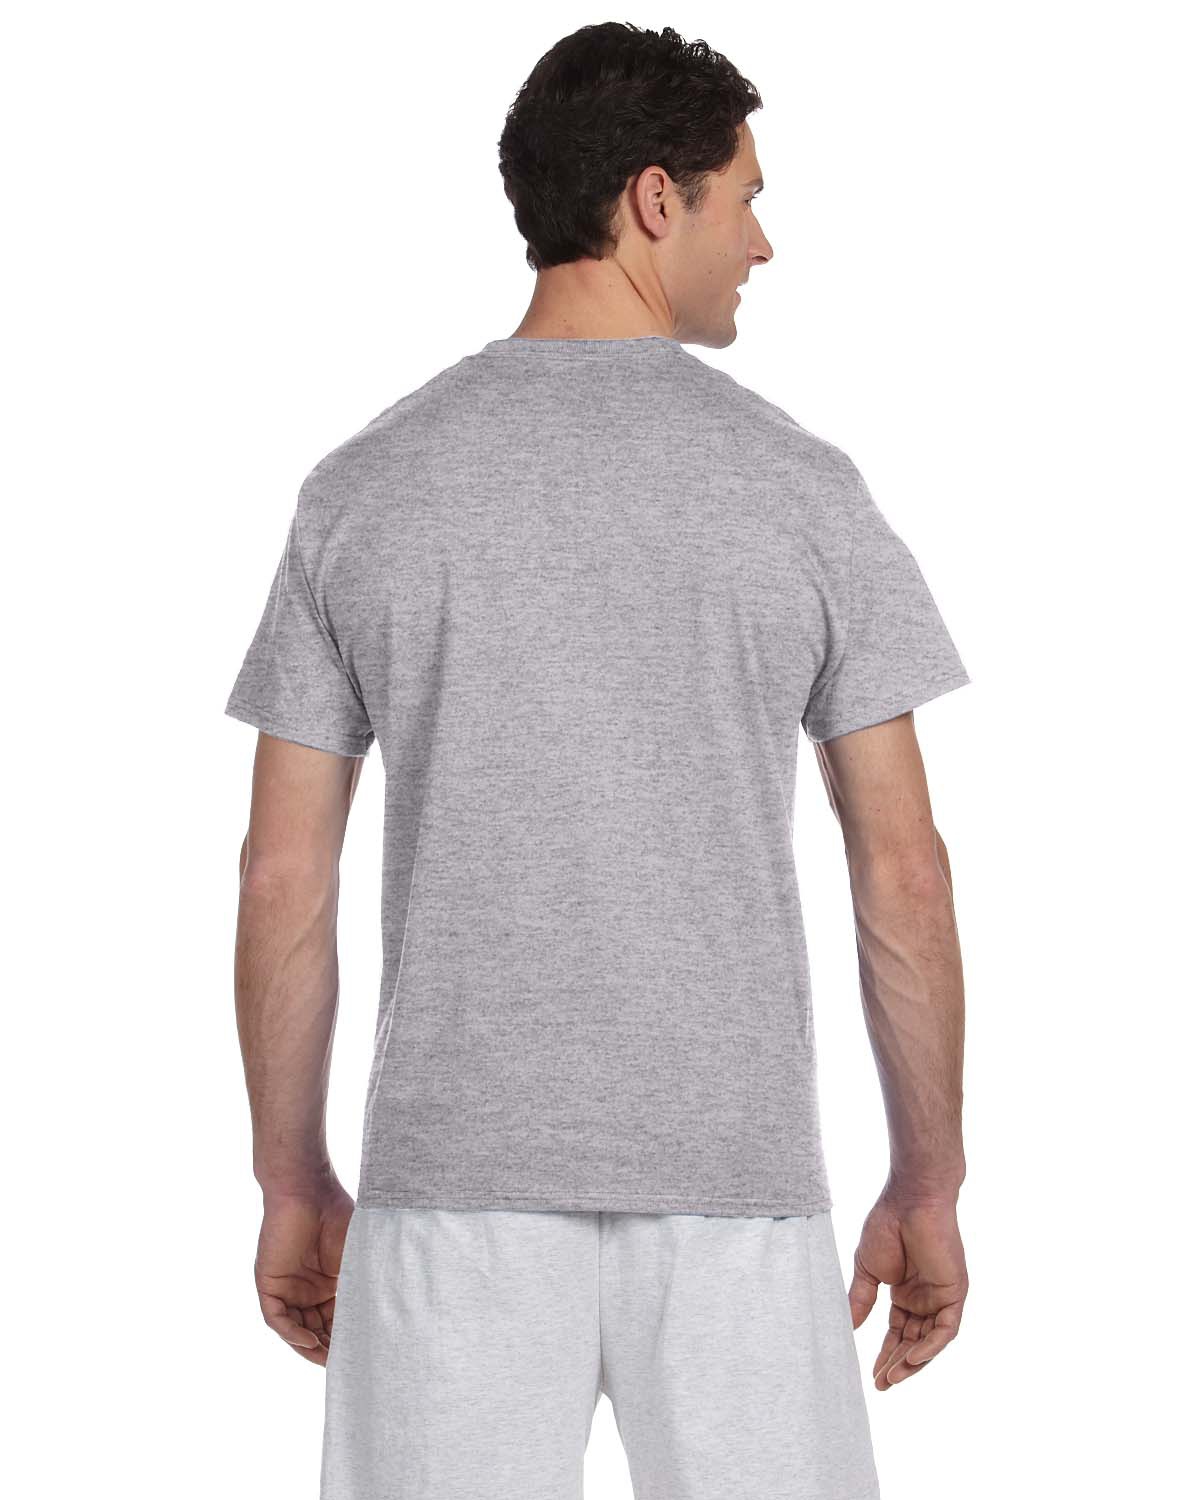 'Champion T525C Men's Cotton Tagless Short Sleeve T-Shirt'